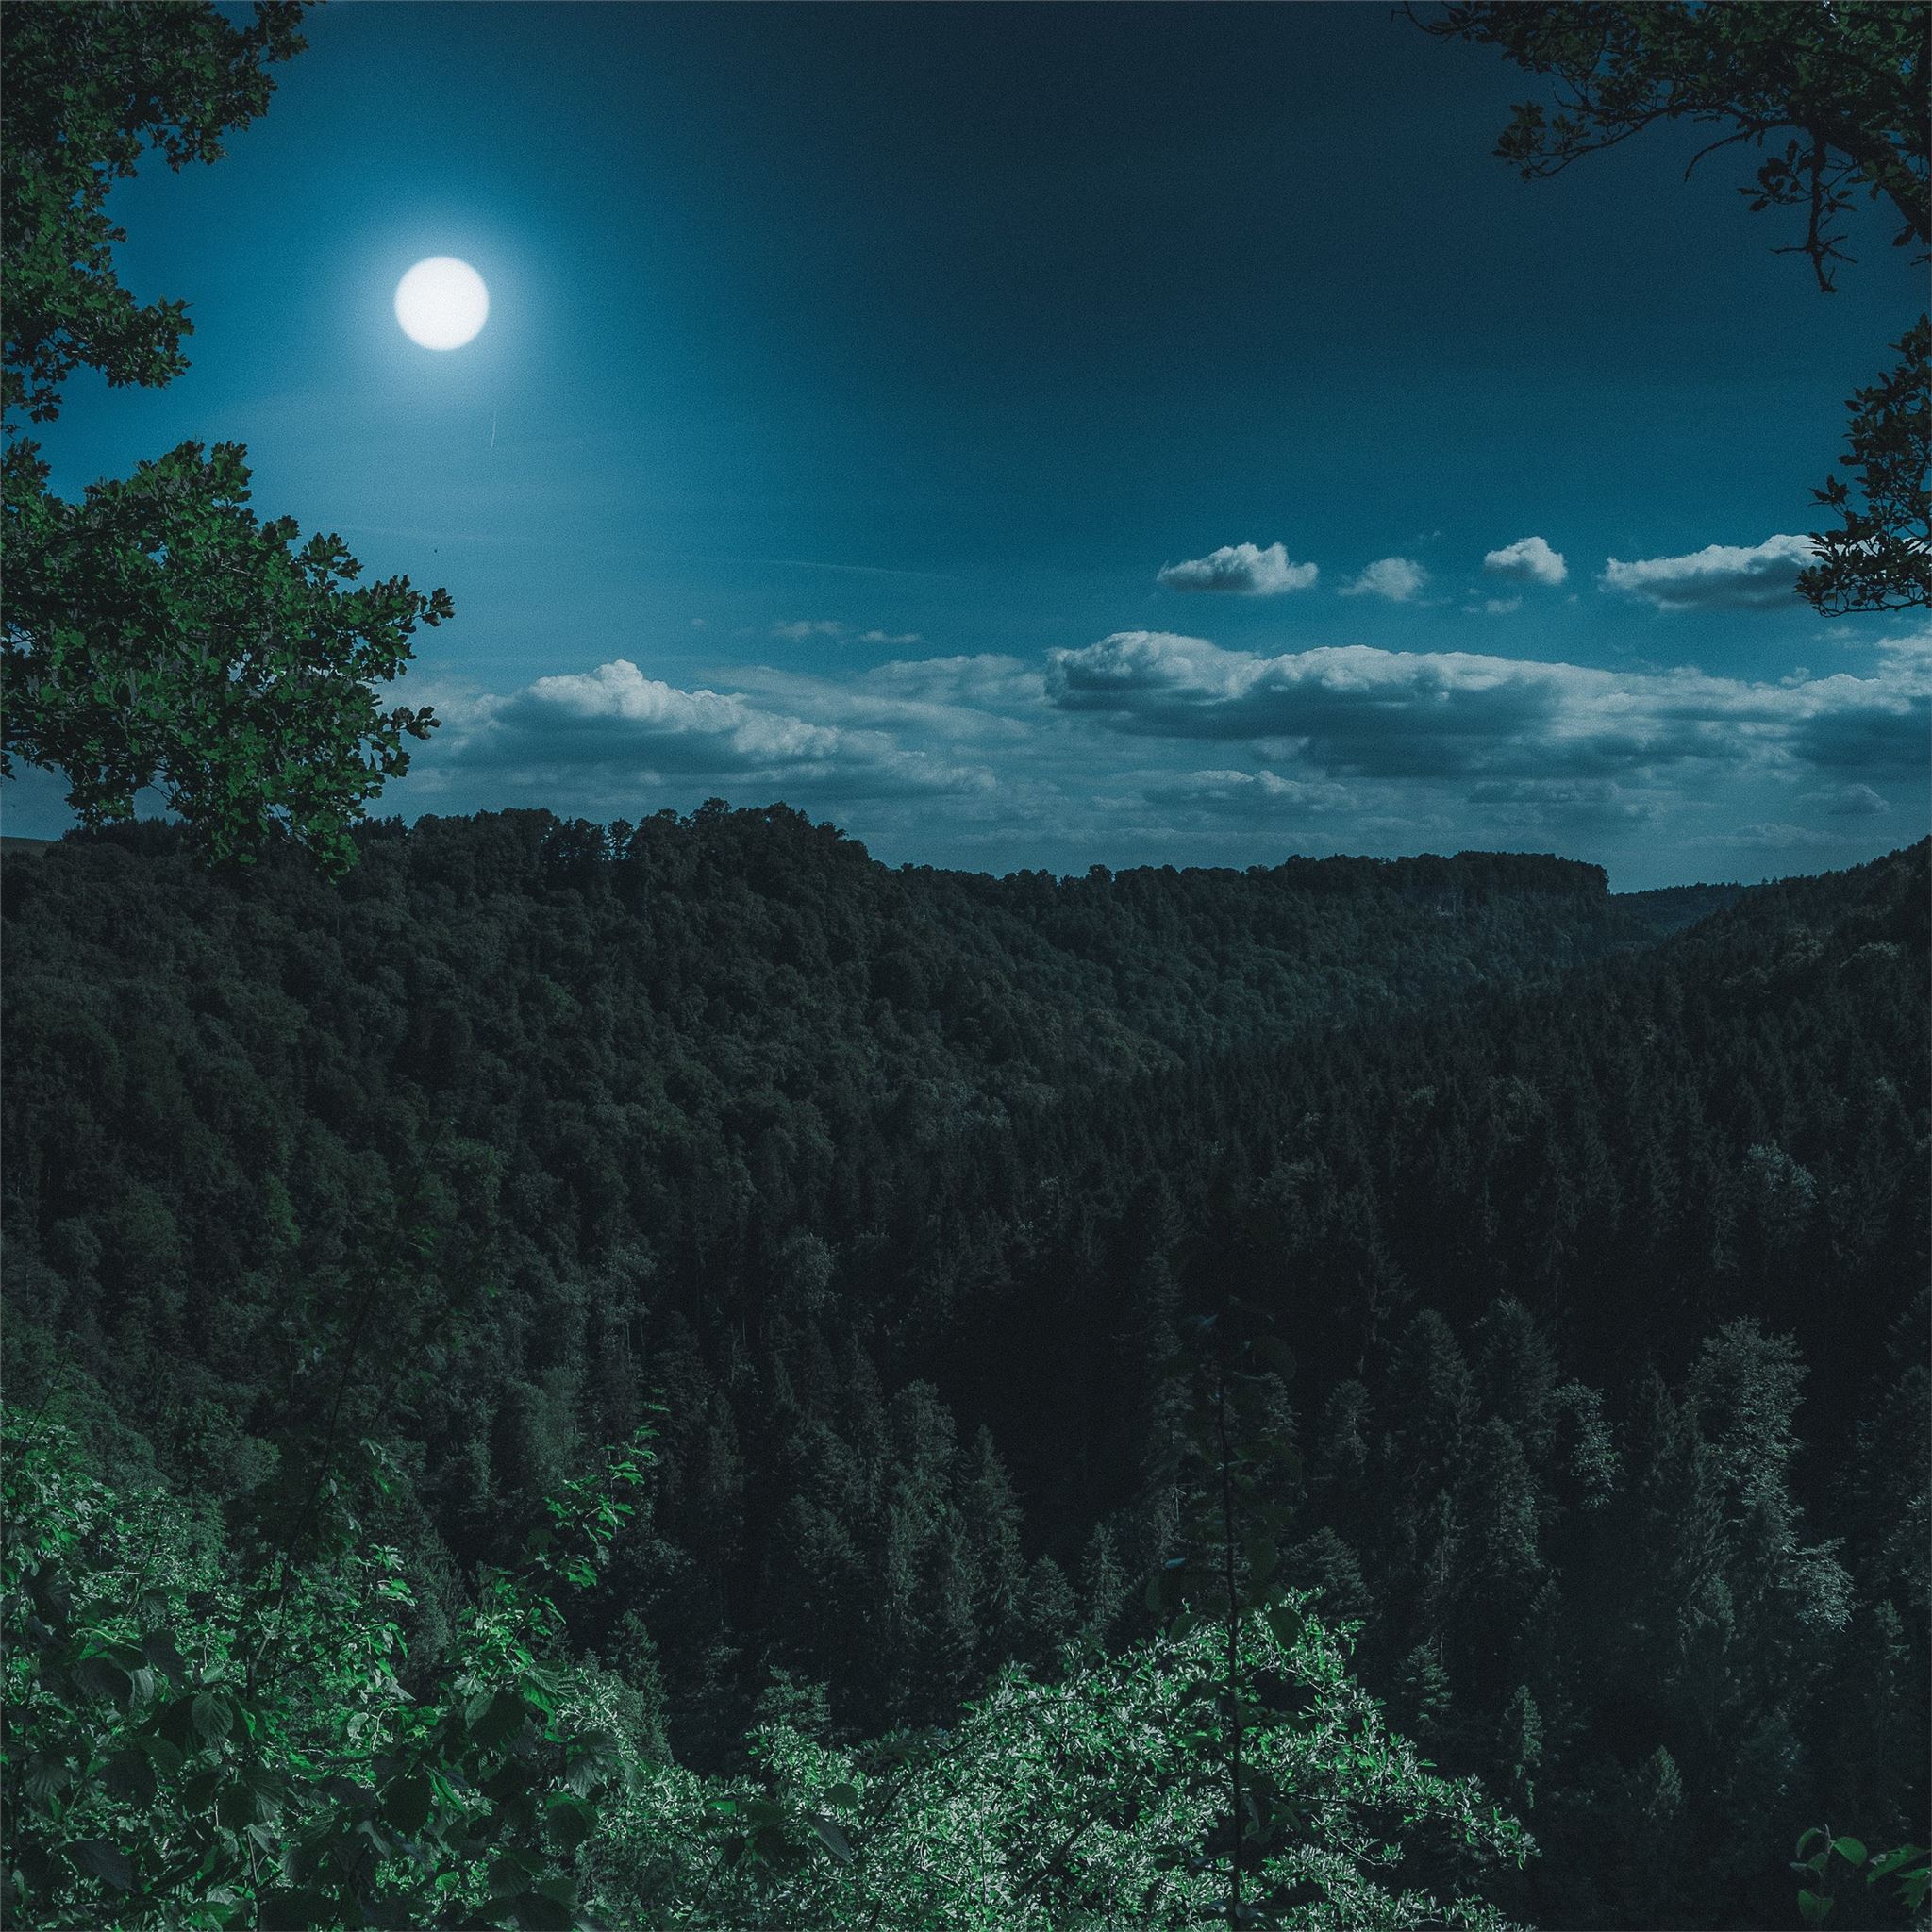 dark night forest view 5k iPad Pro Wallpaper Free Download